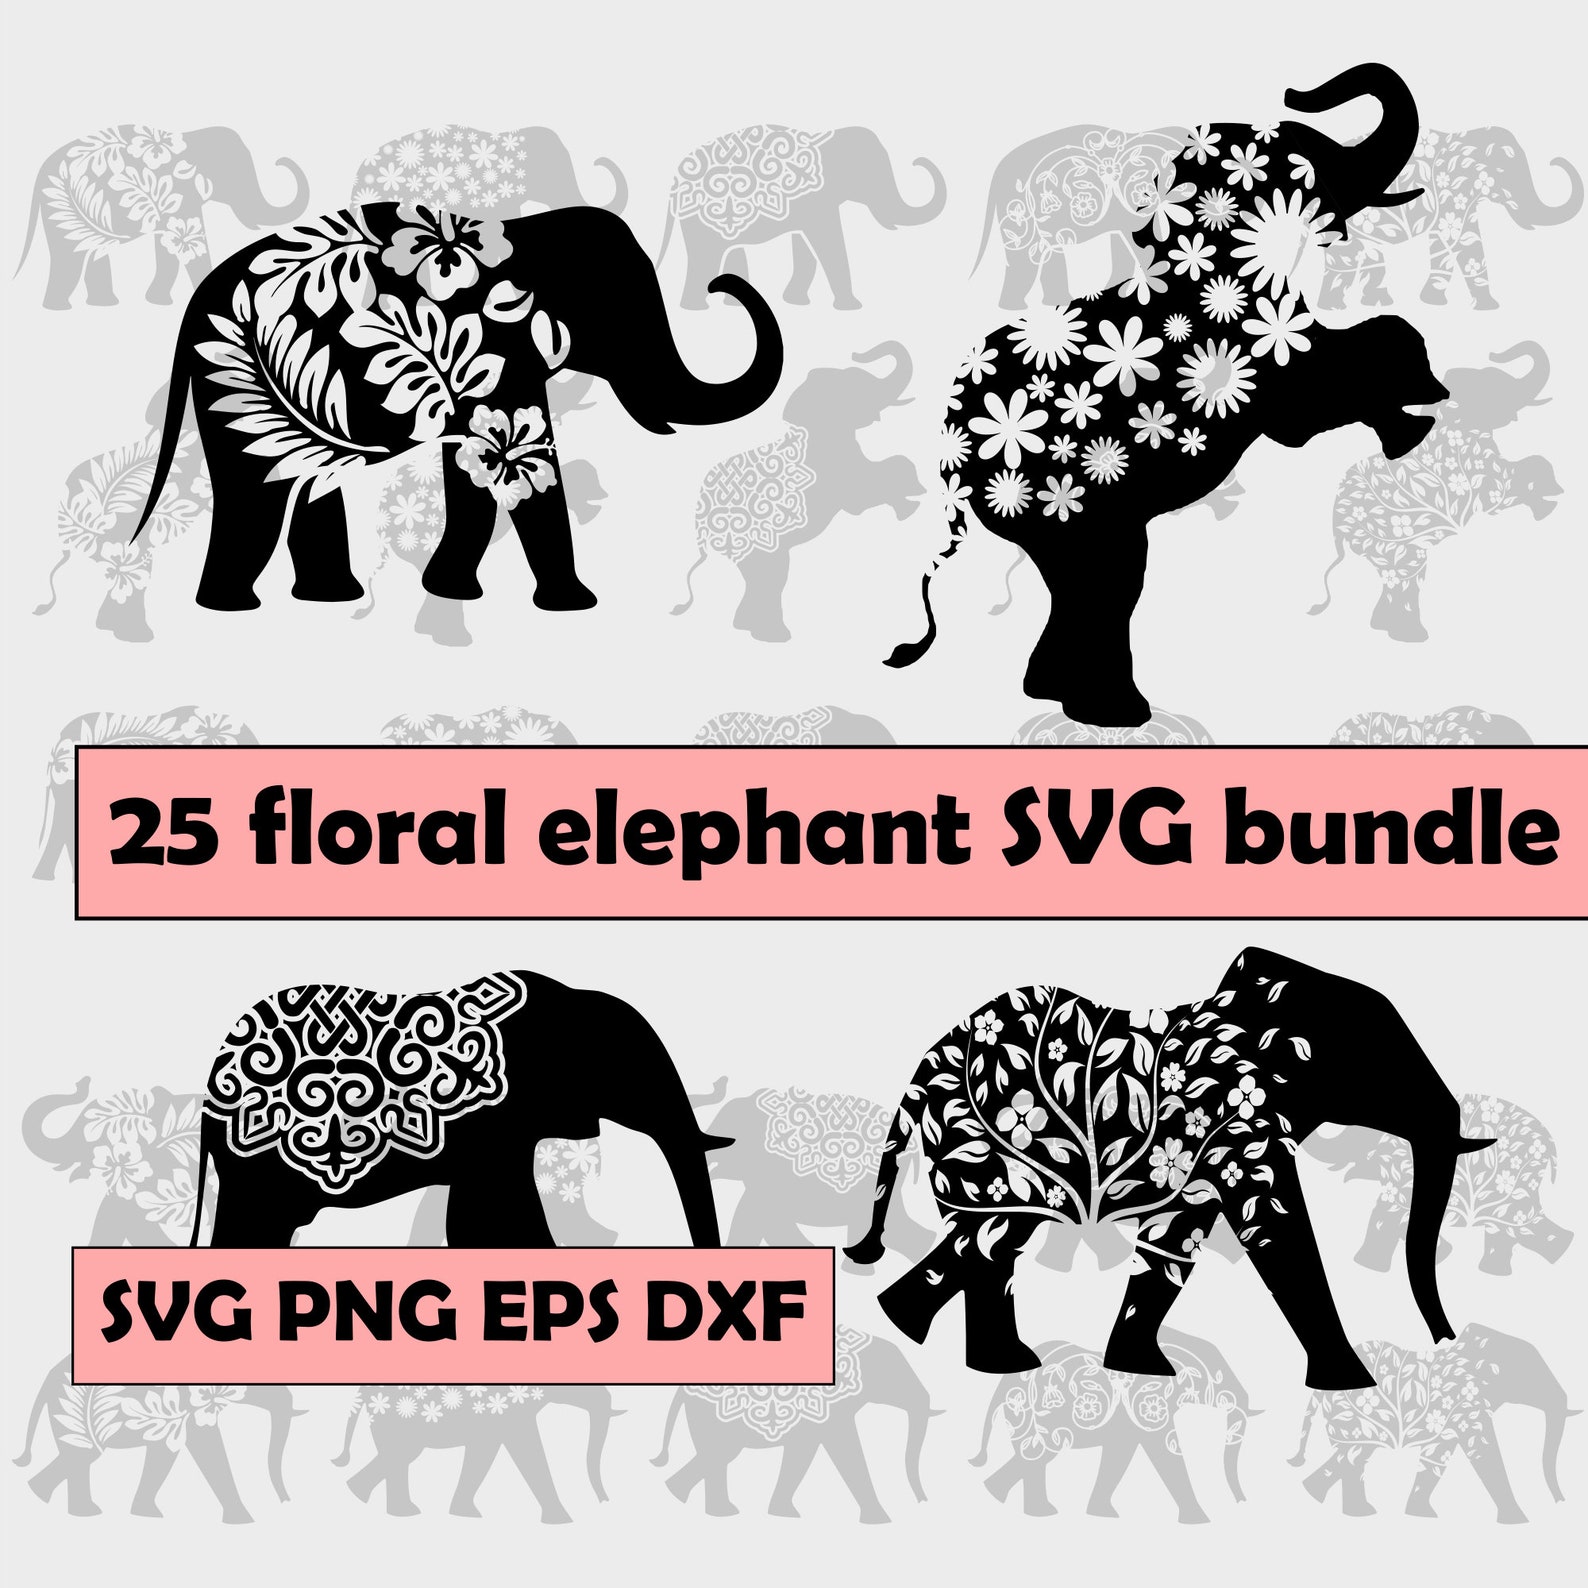 Elephant svg bundle with flowers and elephants.